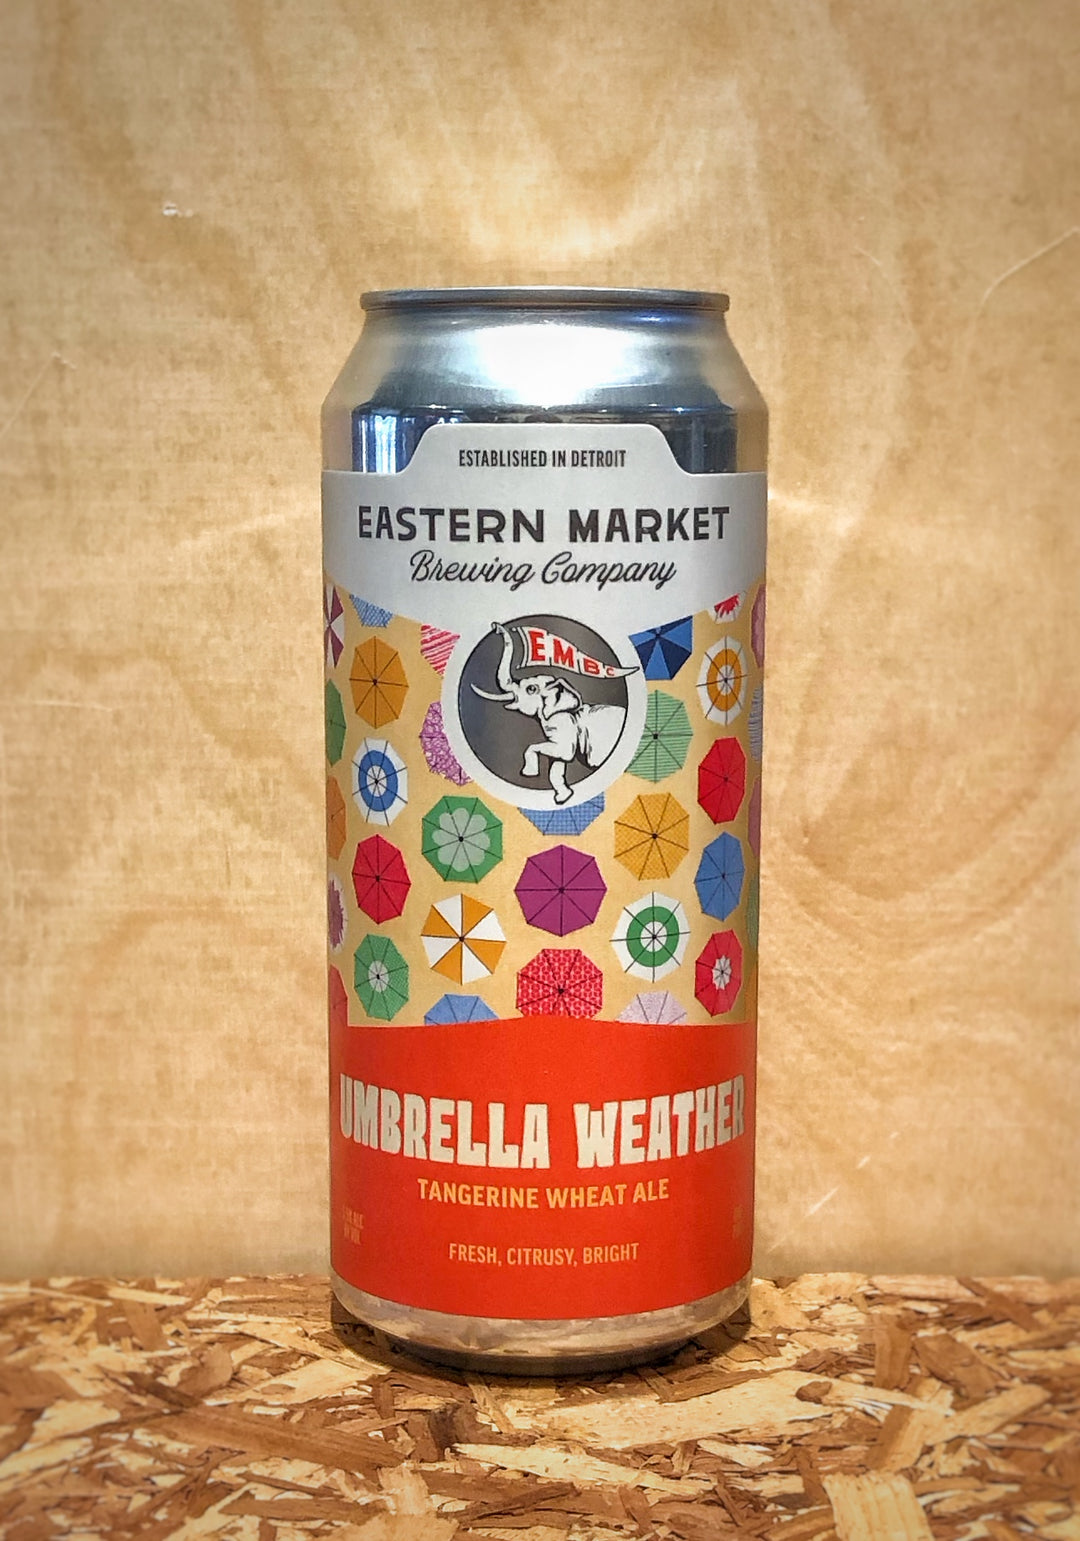 Eastern Market Brewing Co. 'Umbrella Weather' Tangerine Wheat Ale (Detroit, MI)